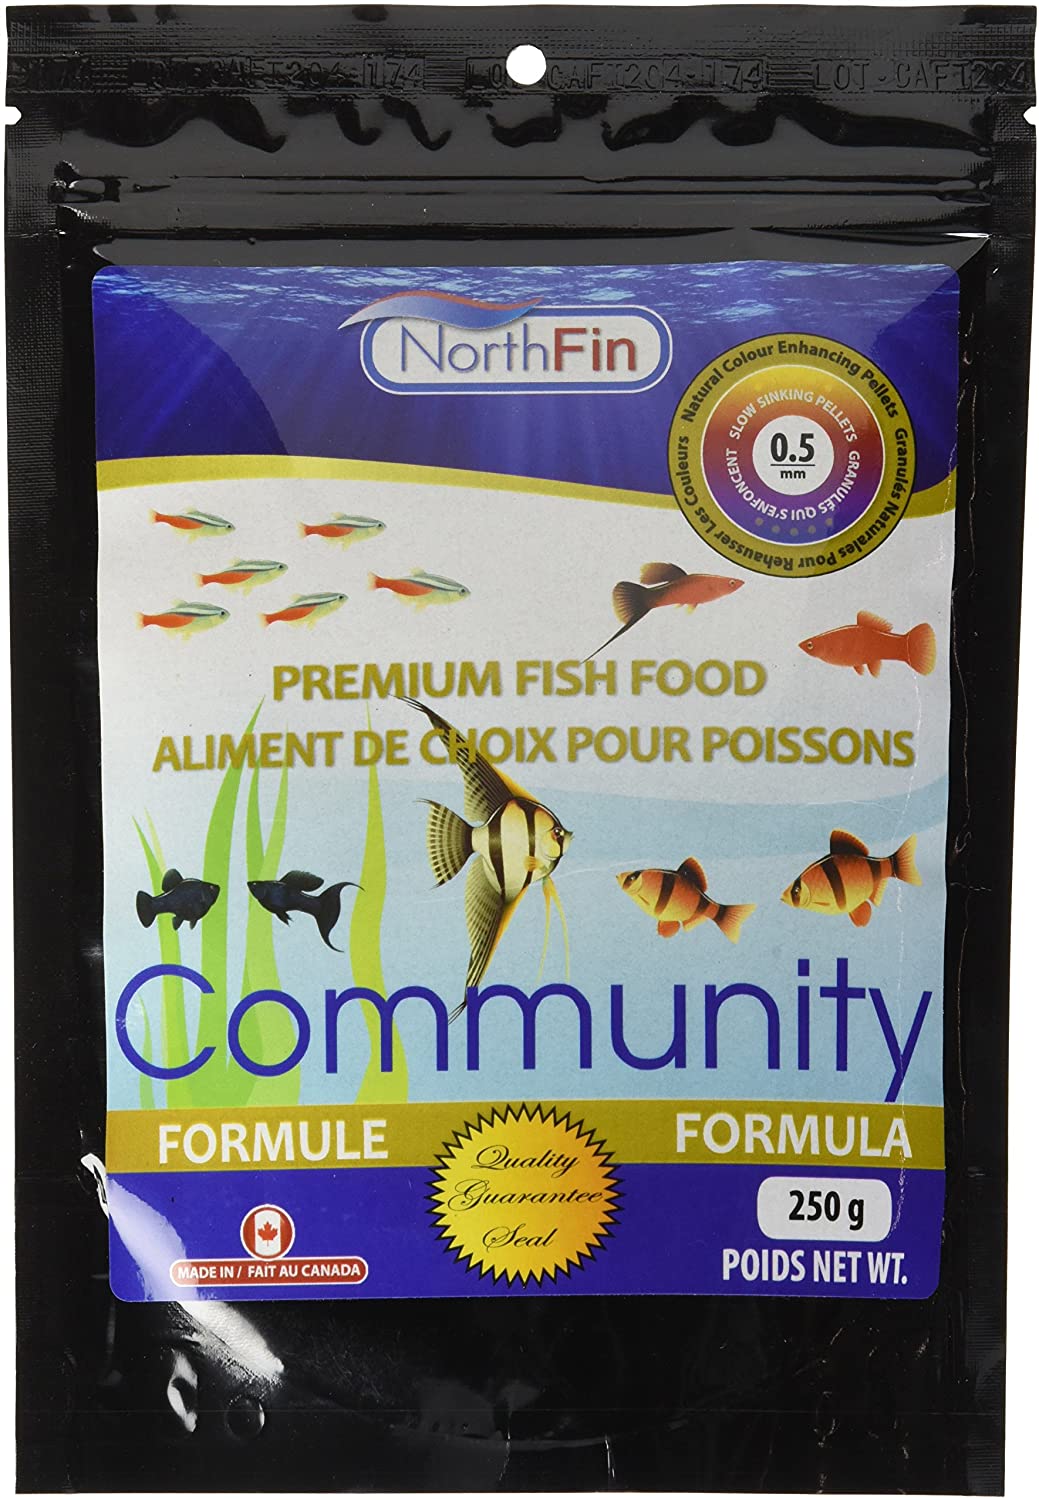 NorthFin Community Premium Fish Food